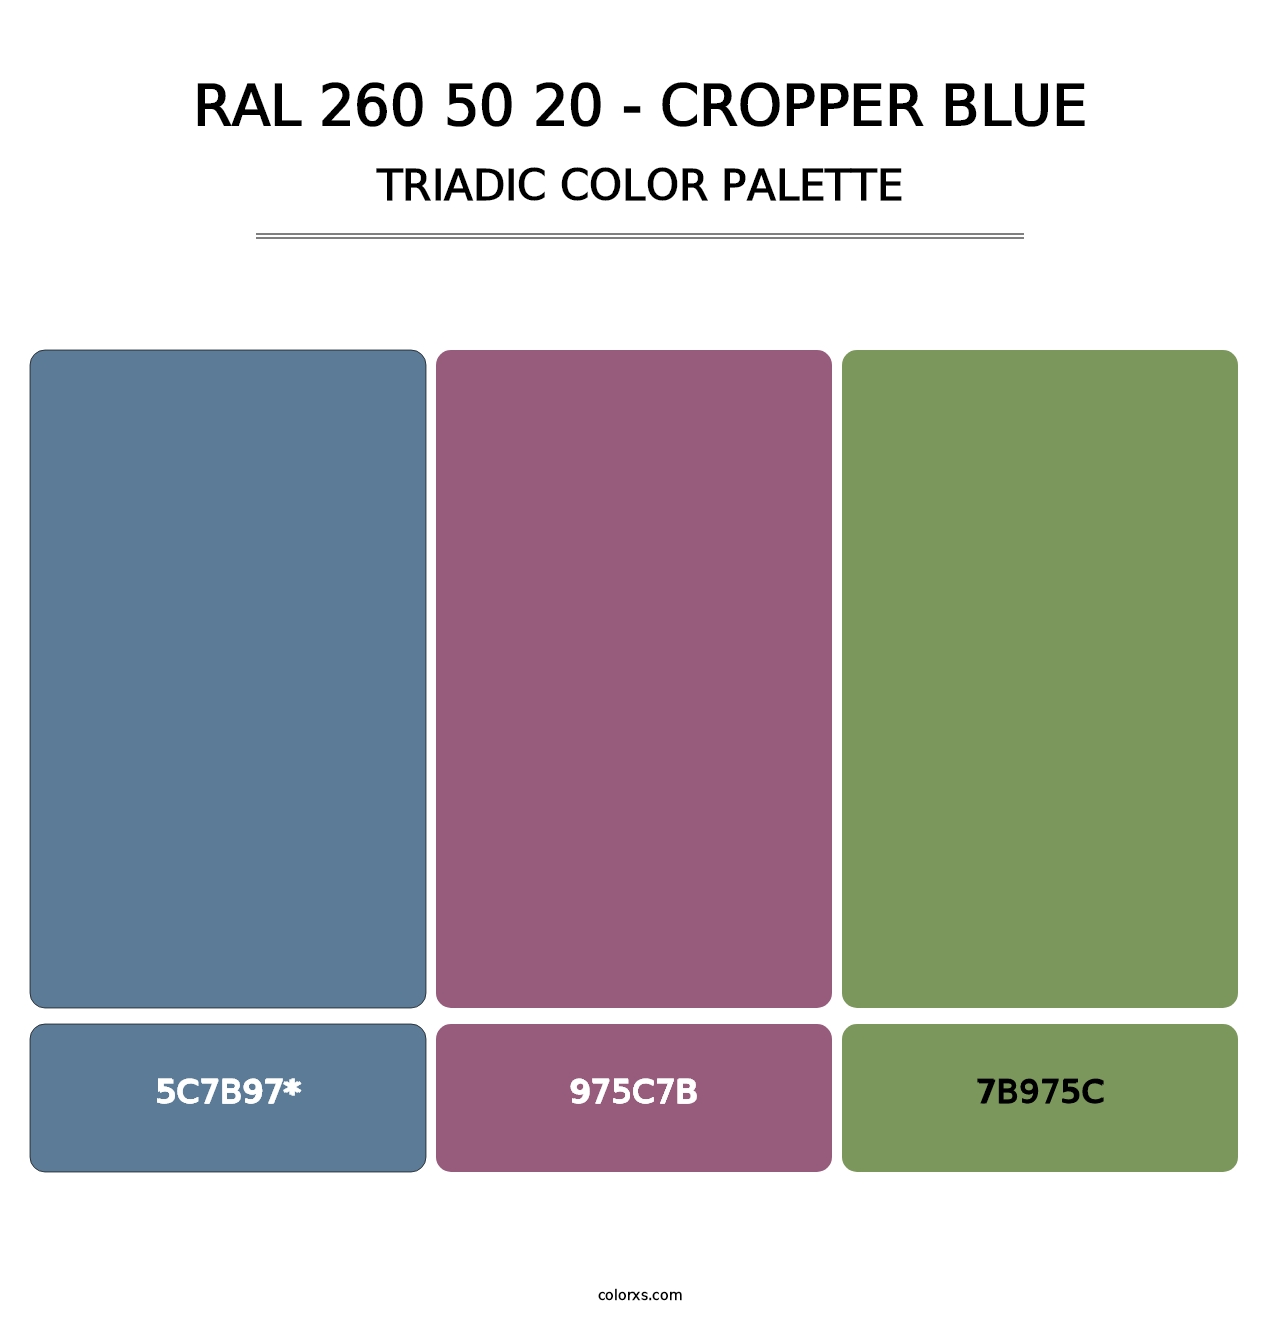 RAL 260 50 20 - Cropper Blue - Triadic Color Palette